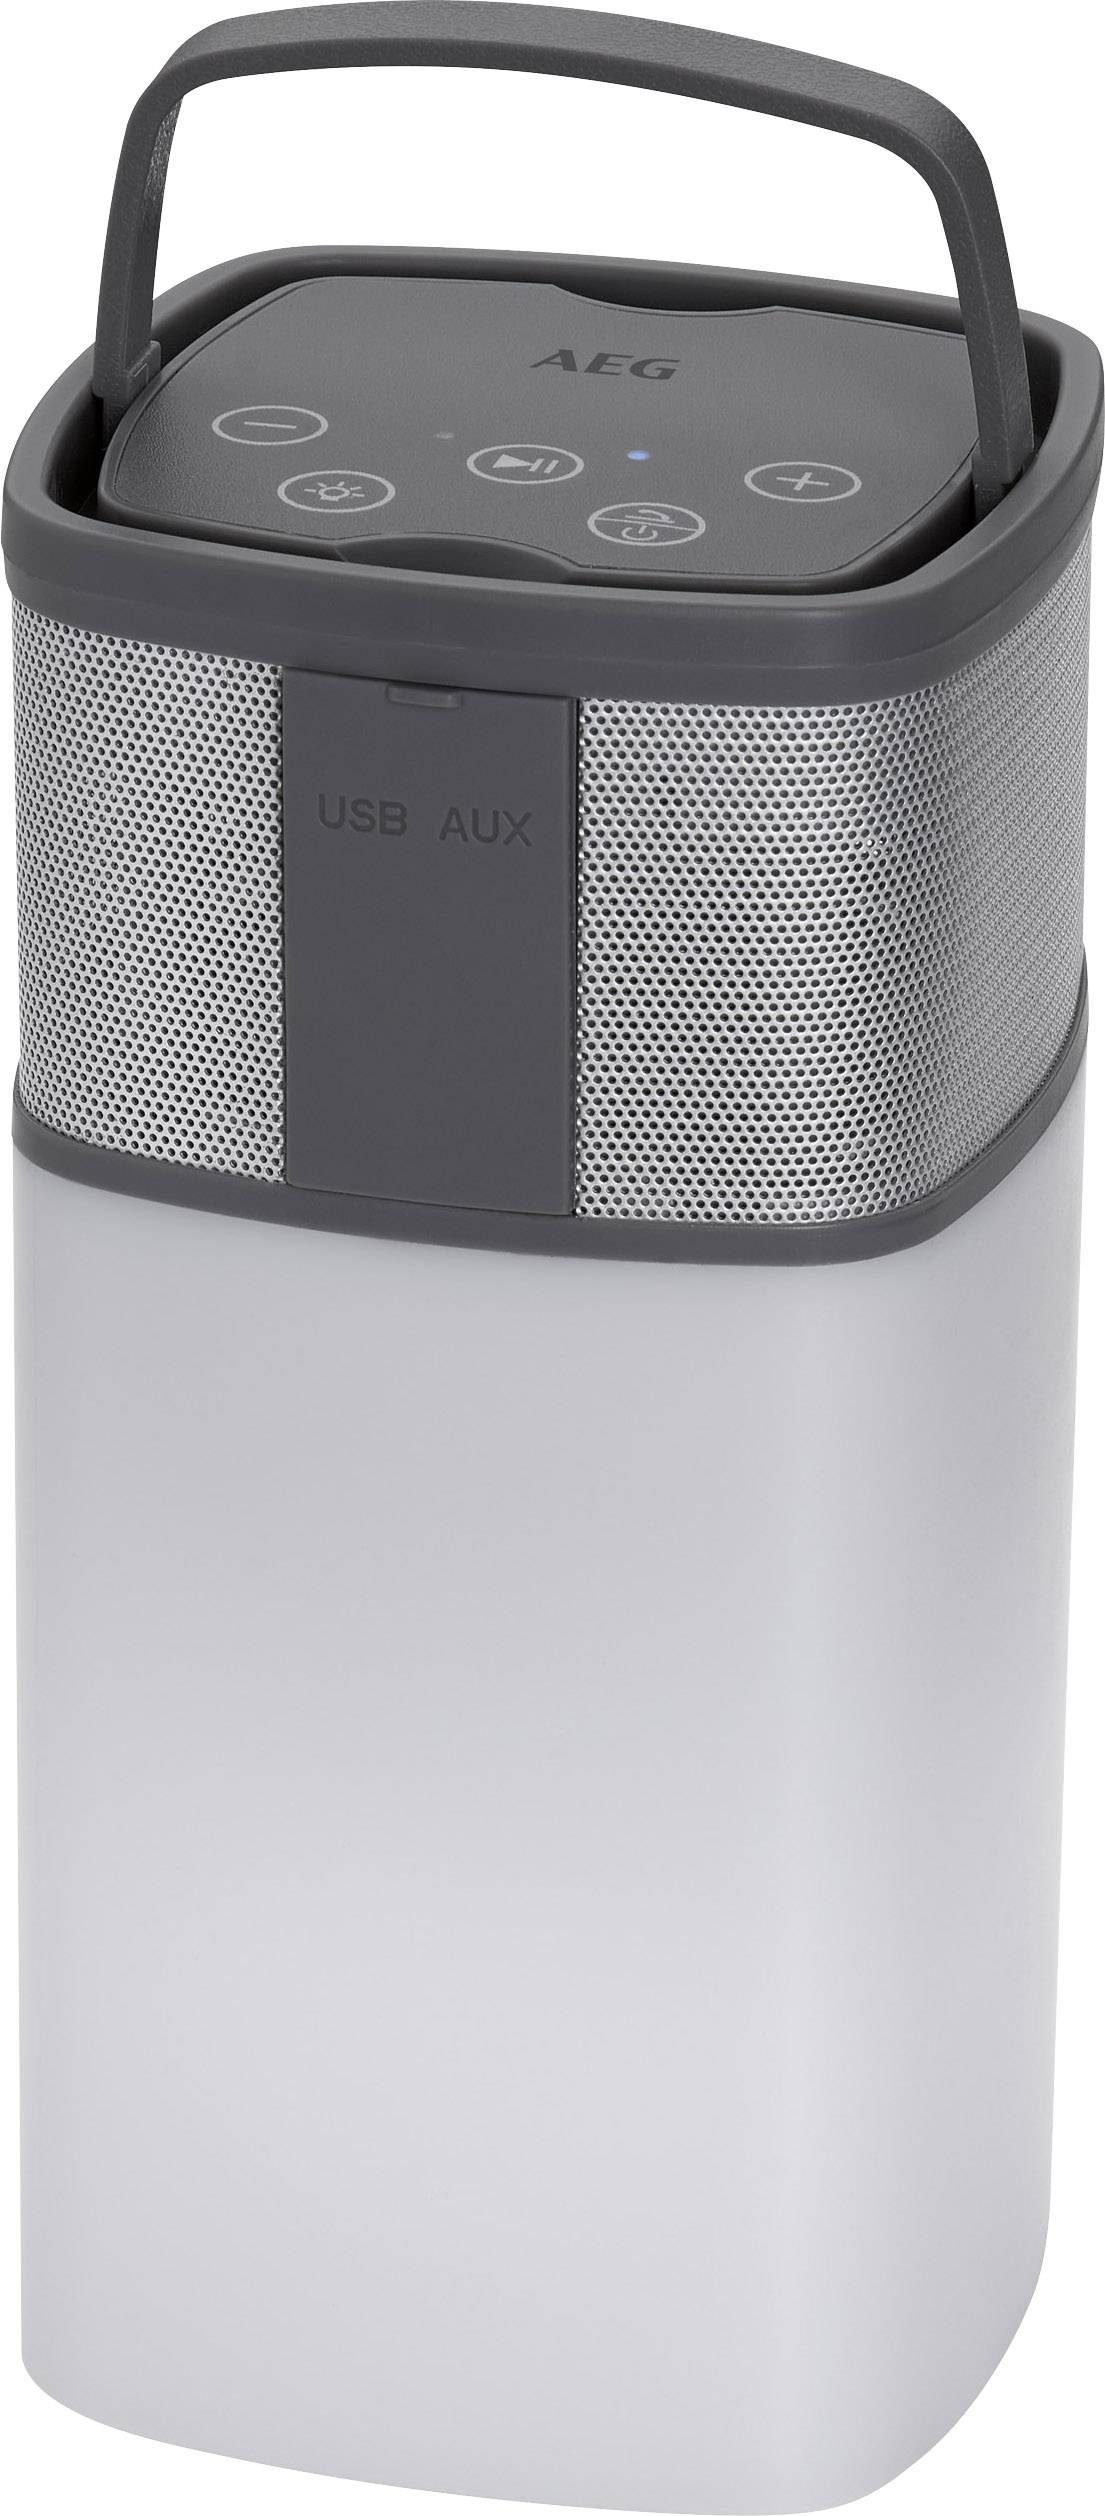 AEG BSS 4841 speaker Aux, incl. bracket, Outdoor, spray-proof, SD, Handsfree Grey, White | Conrad.com